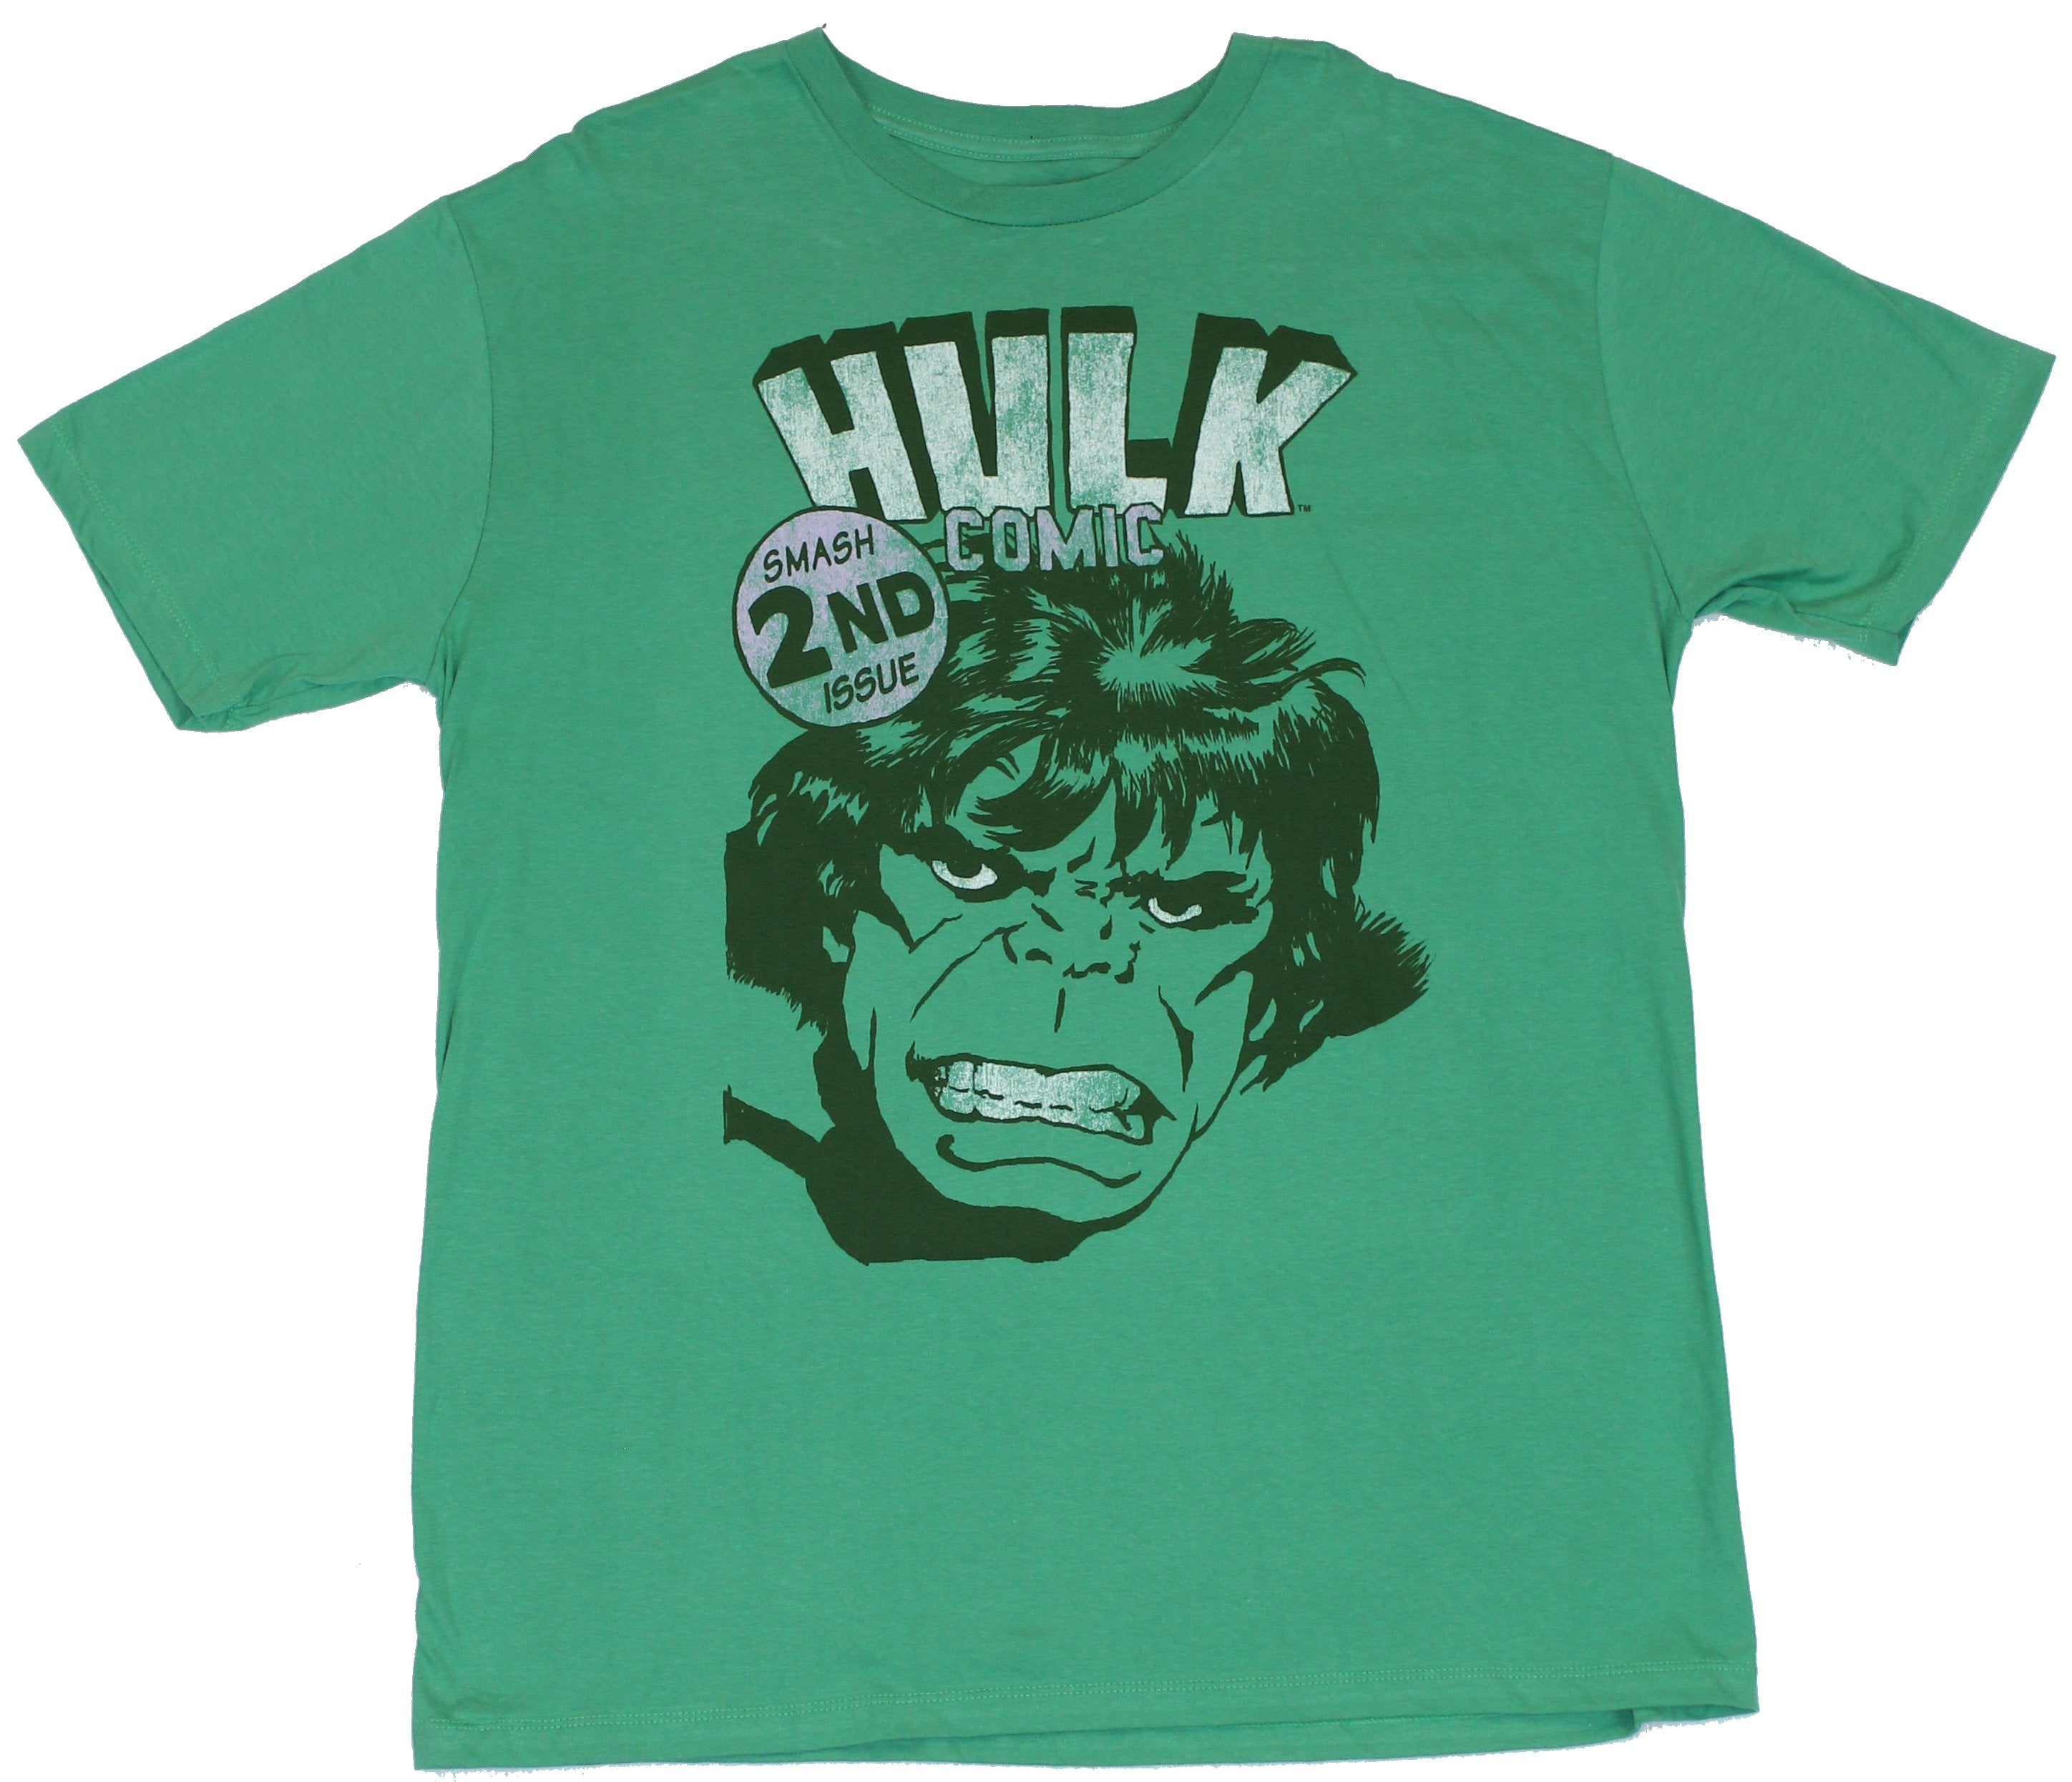 Hulk (Marvel Comics) Mens T-Shirt - Smashing 2nd Issue Head Image